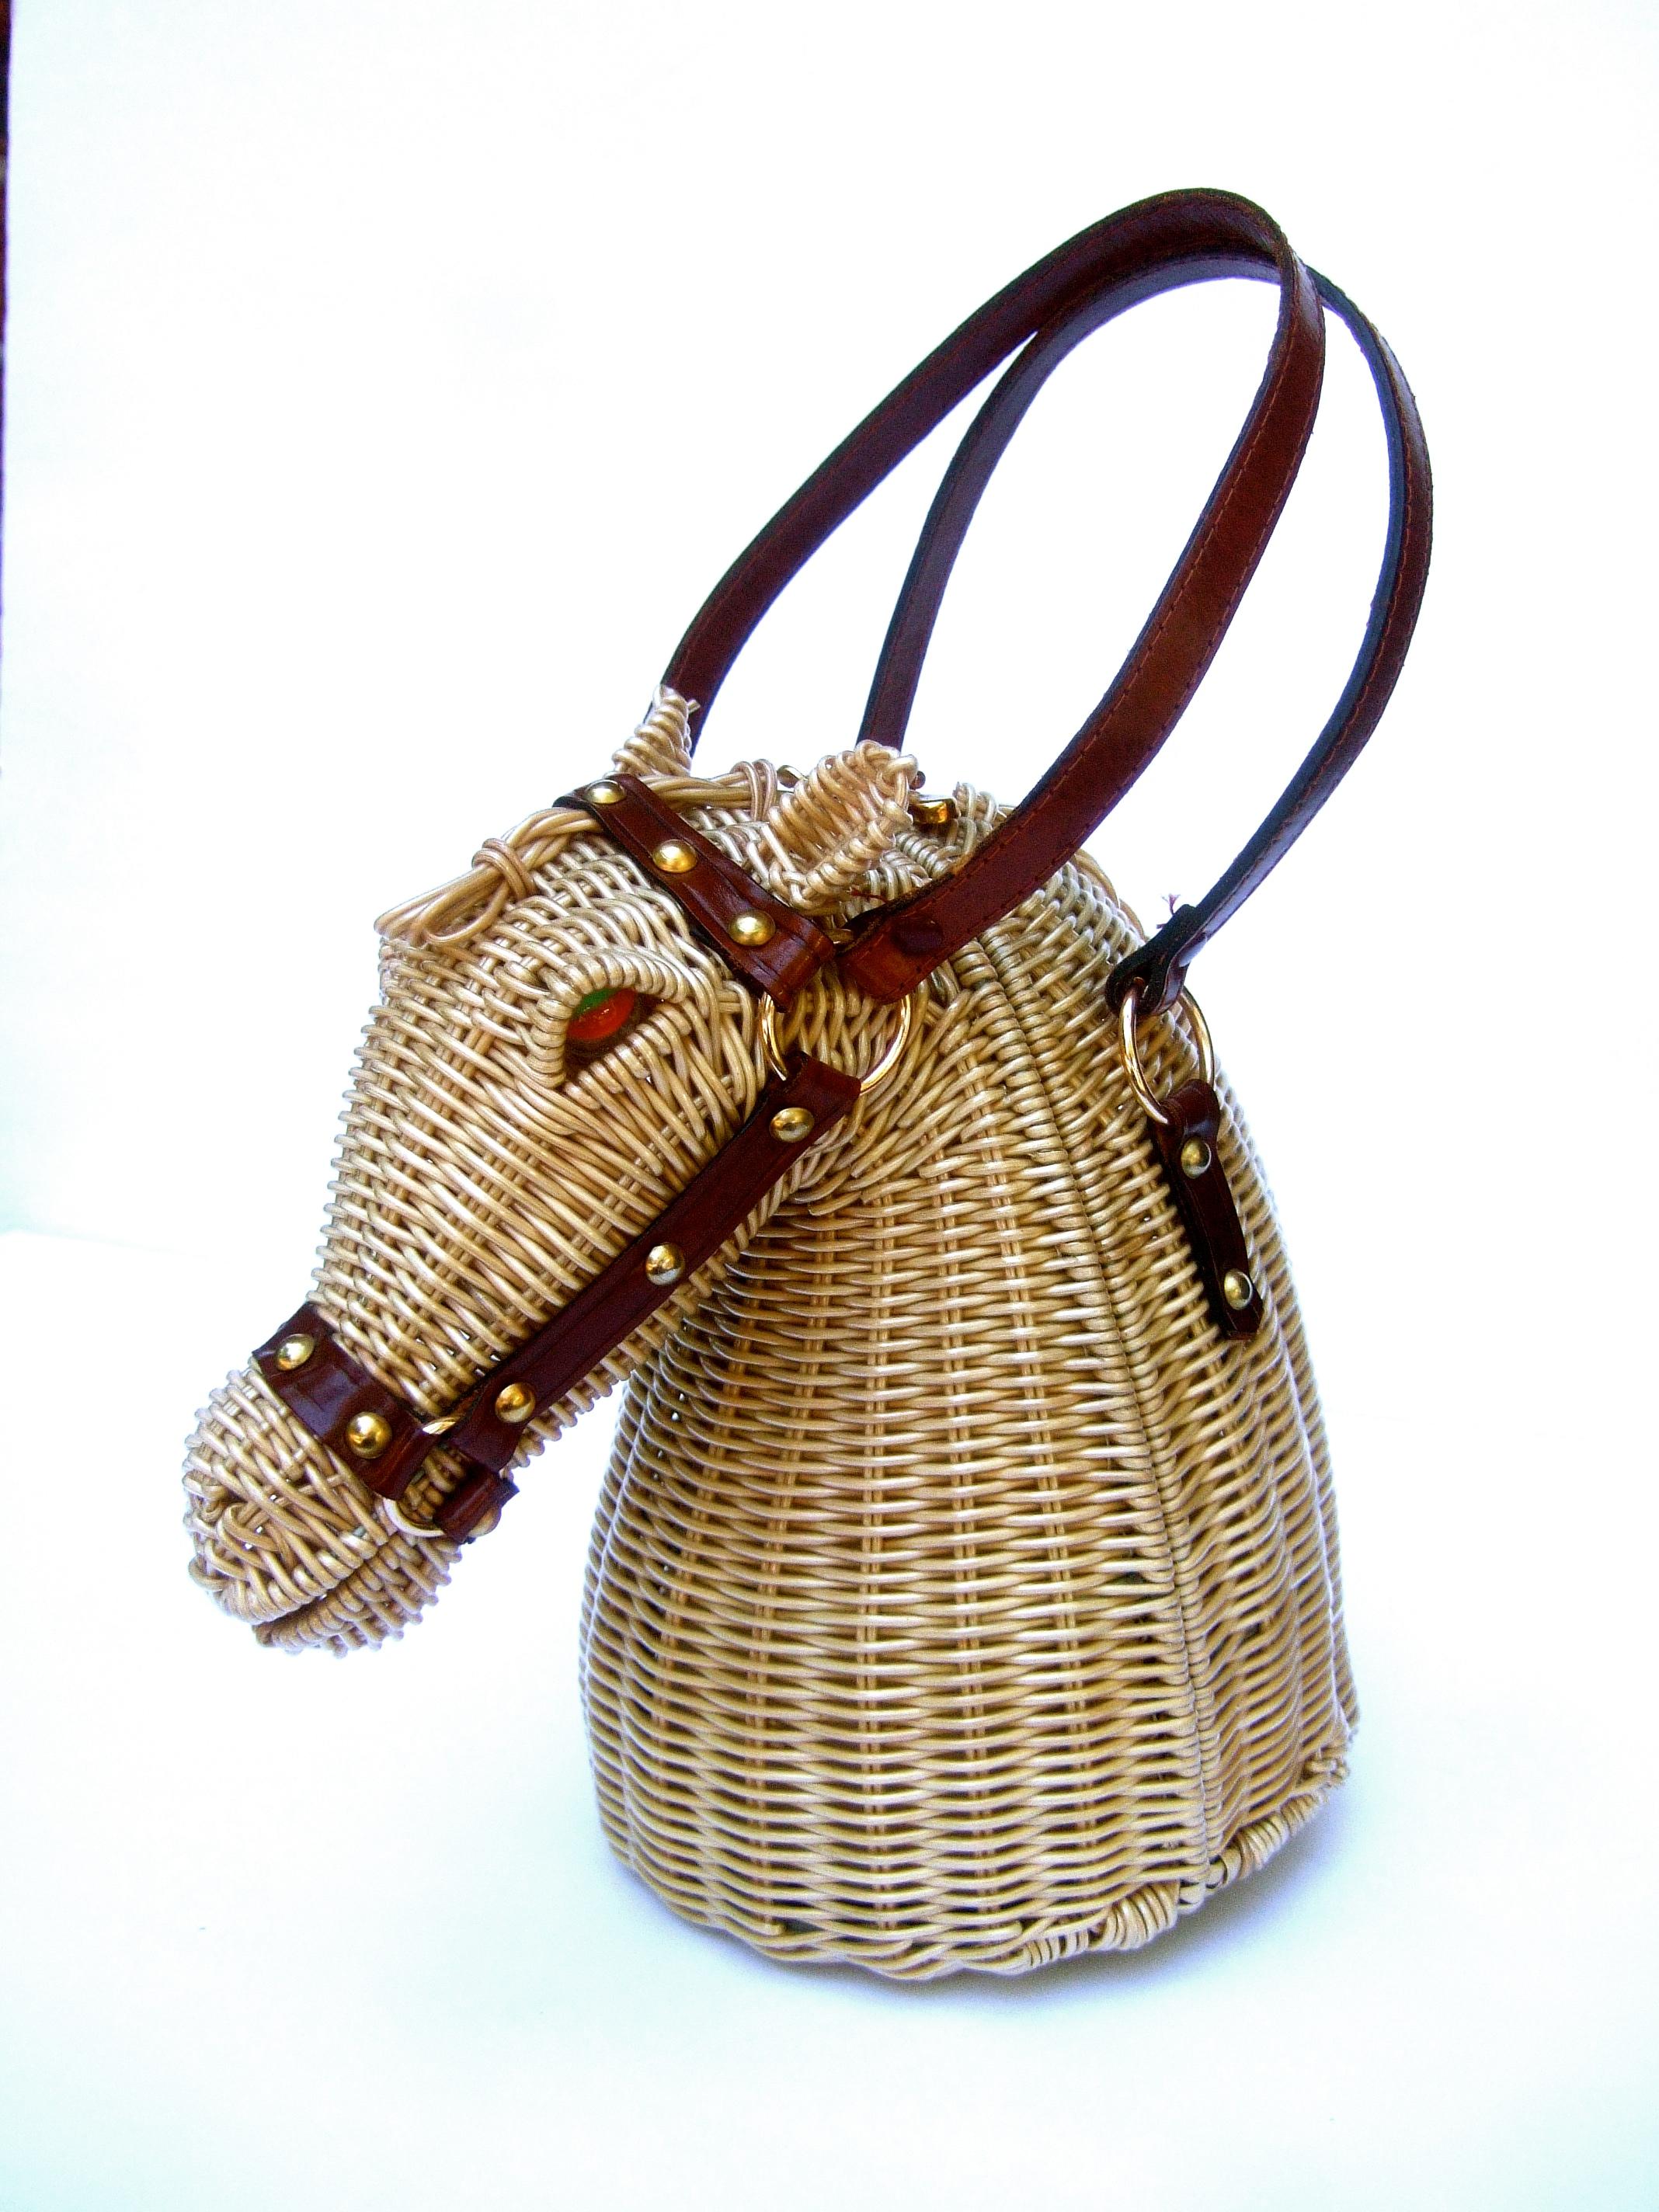 Extremely Rare Figural Wicker Artisan Horse Design Handbag c 1970 5